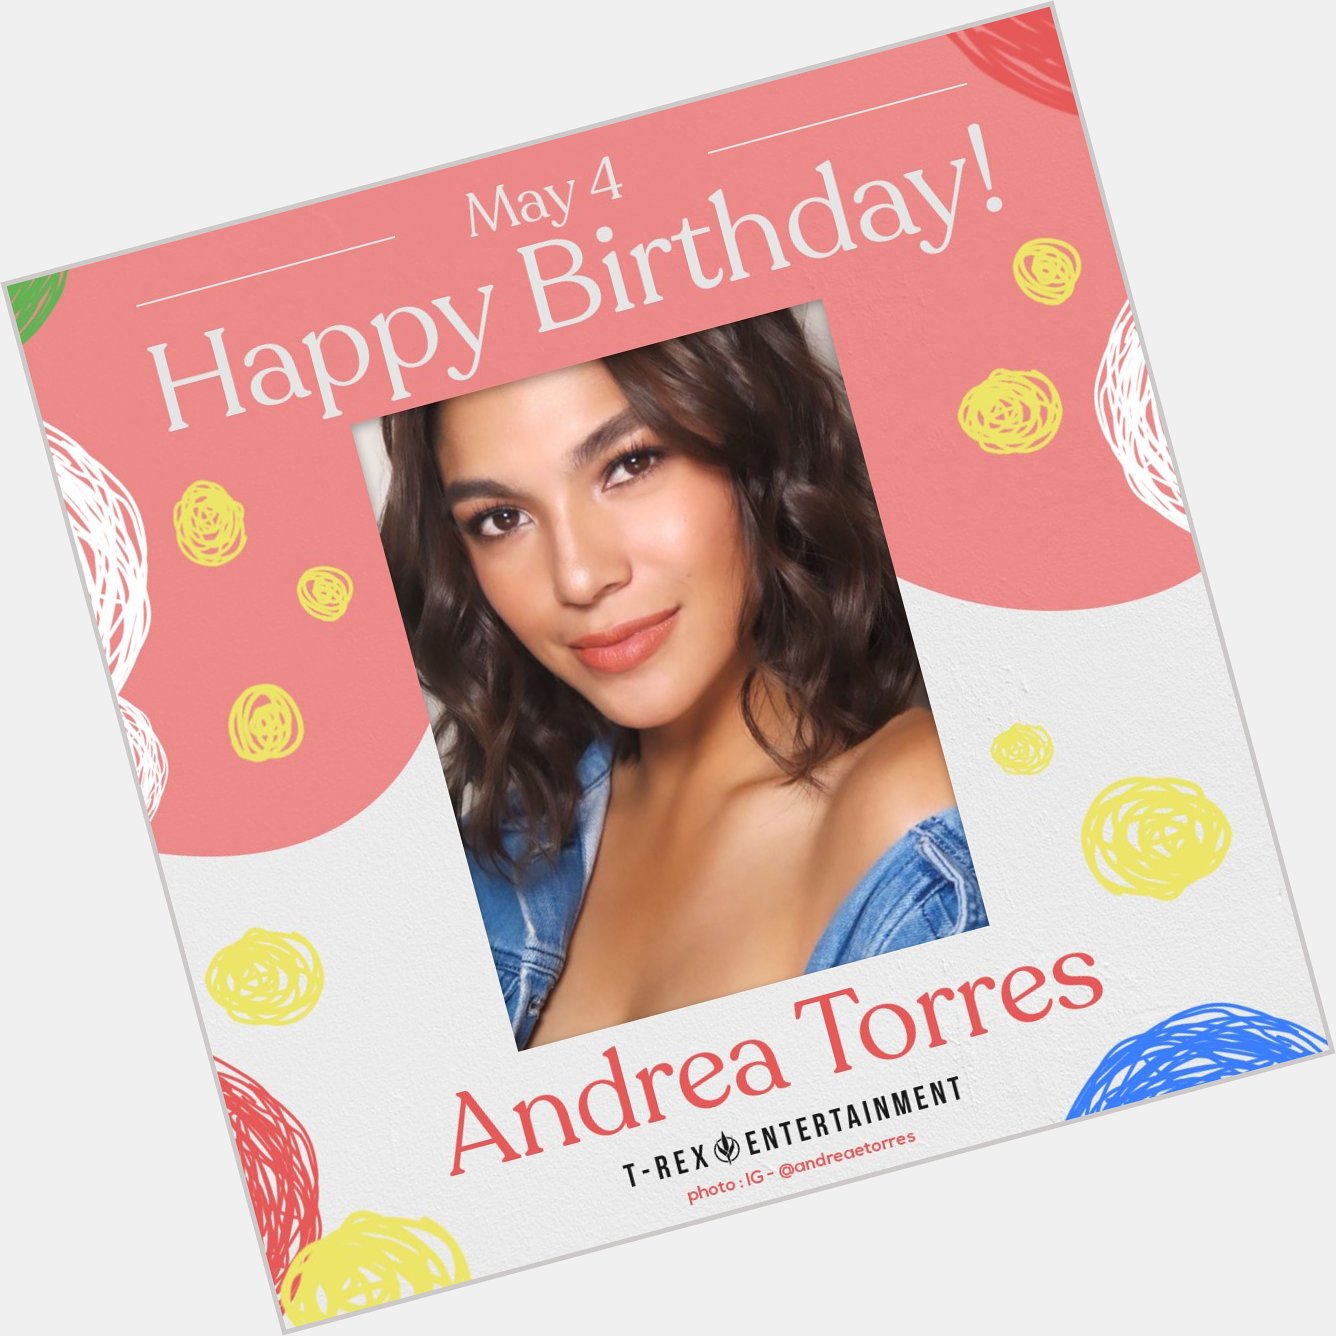 Happy 30th birthday, Andrea Torres! <3

Trivia: Her full name is Andrea Elizabeth Eugenio Torres. 